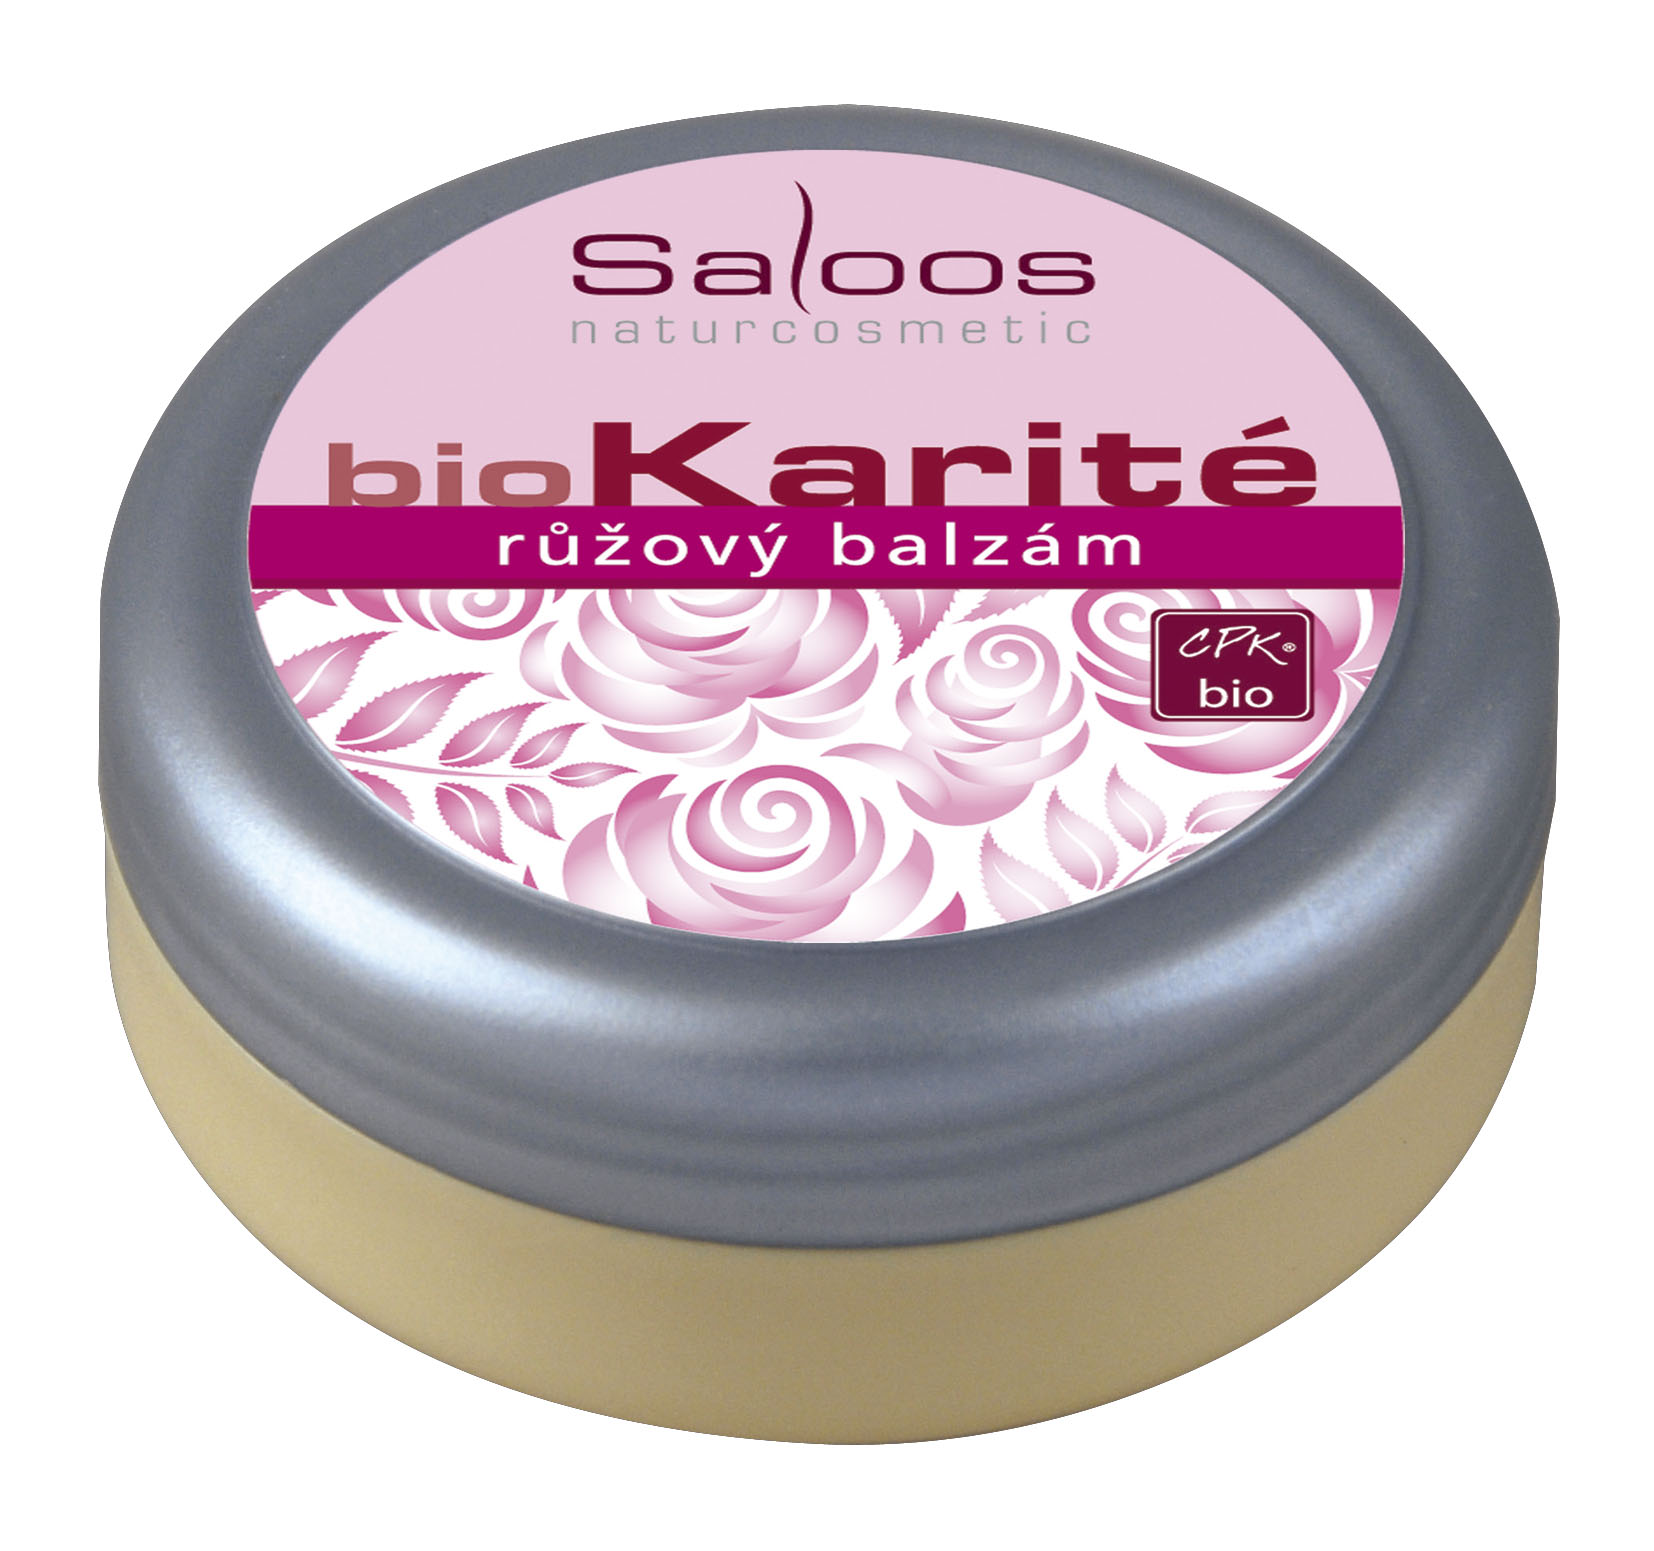 Bio Karité Růžový balzám 50 ml - Saloos